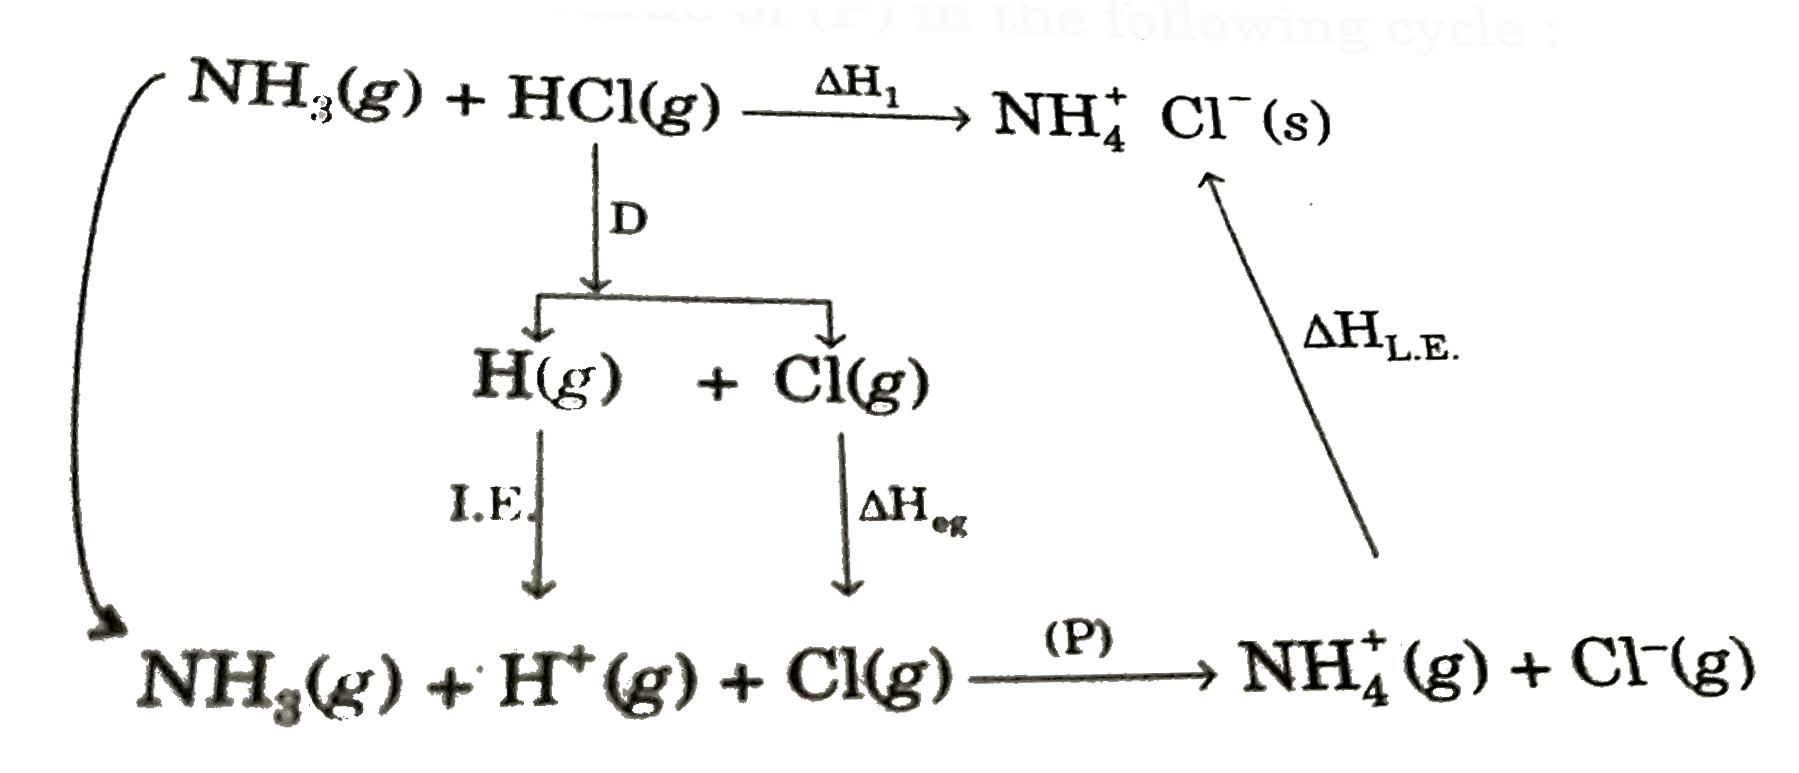 Find out the value of (P) in the following cycle:       Given DeltaH(1) =- 400 kJ, I.E. = + 50 kJ, D = + 50 kJ, DeltaH(eg) = - 30 kJ lattice energy - - 100 kJ